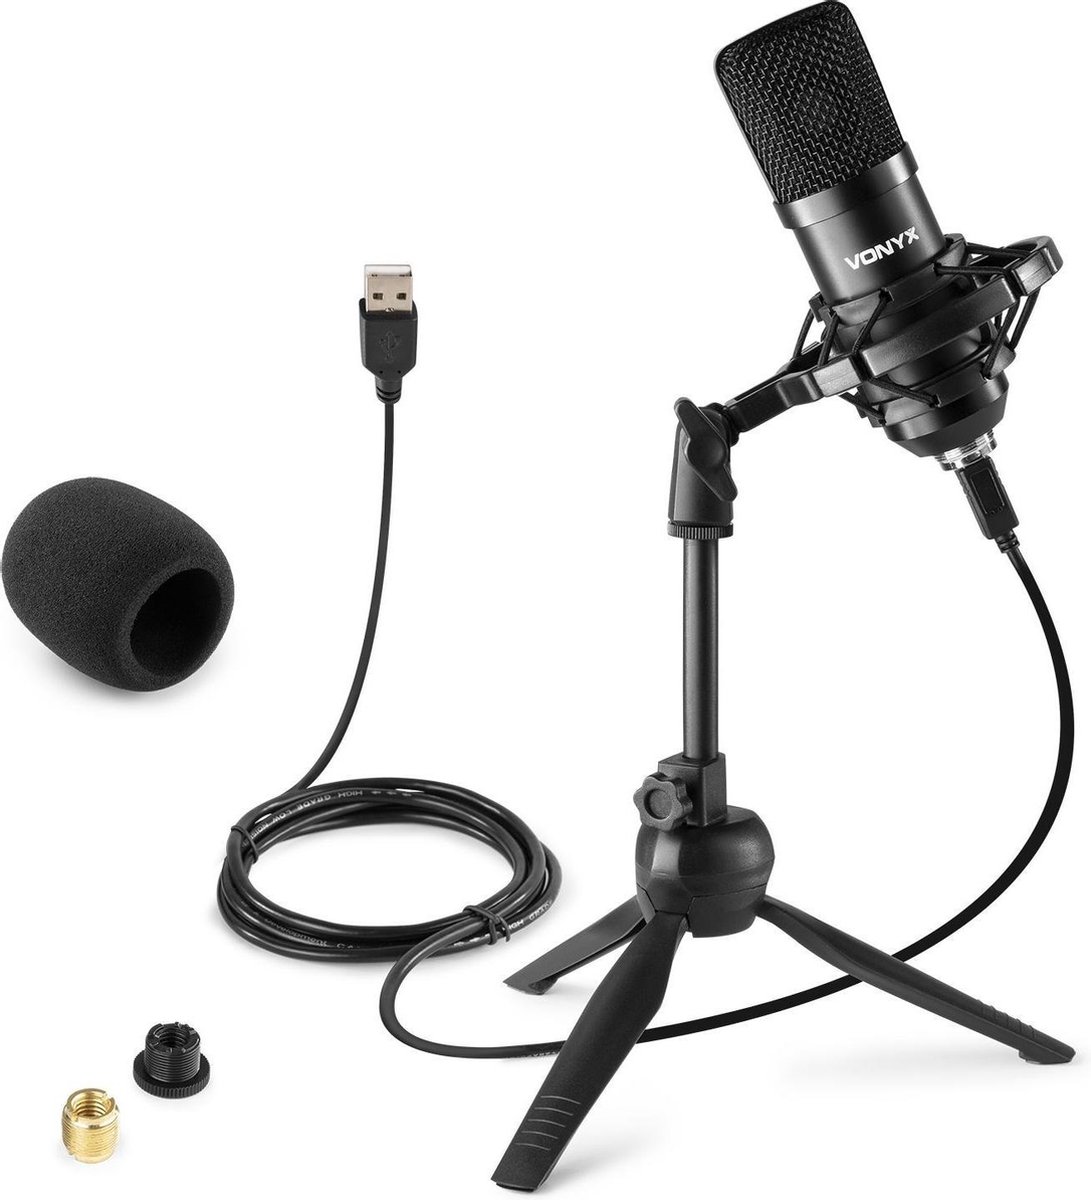 USB microfoon voor pc - Vonyx CM300B - USB studio microfoon incl.  tafelstandaard - Zwart | bol